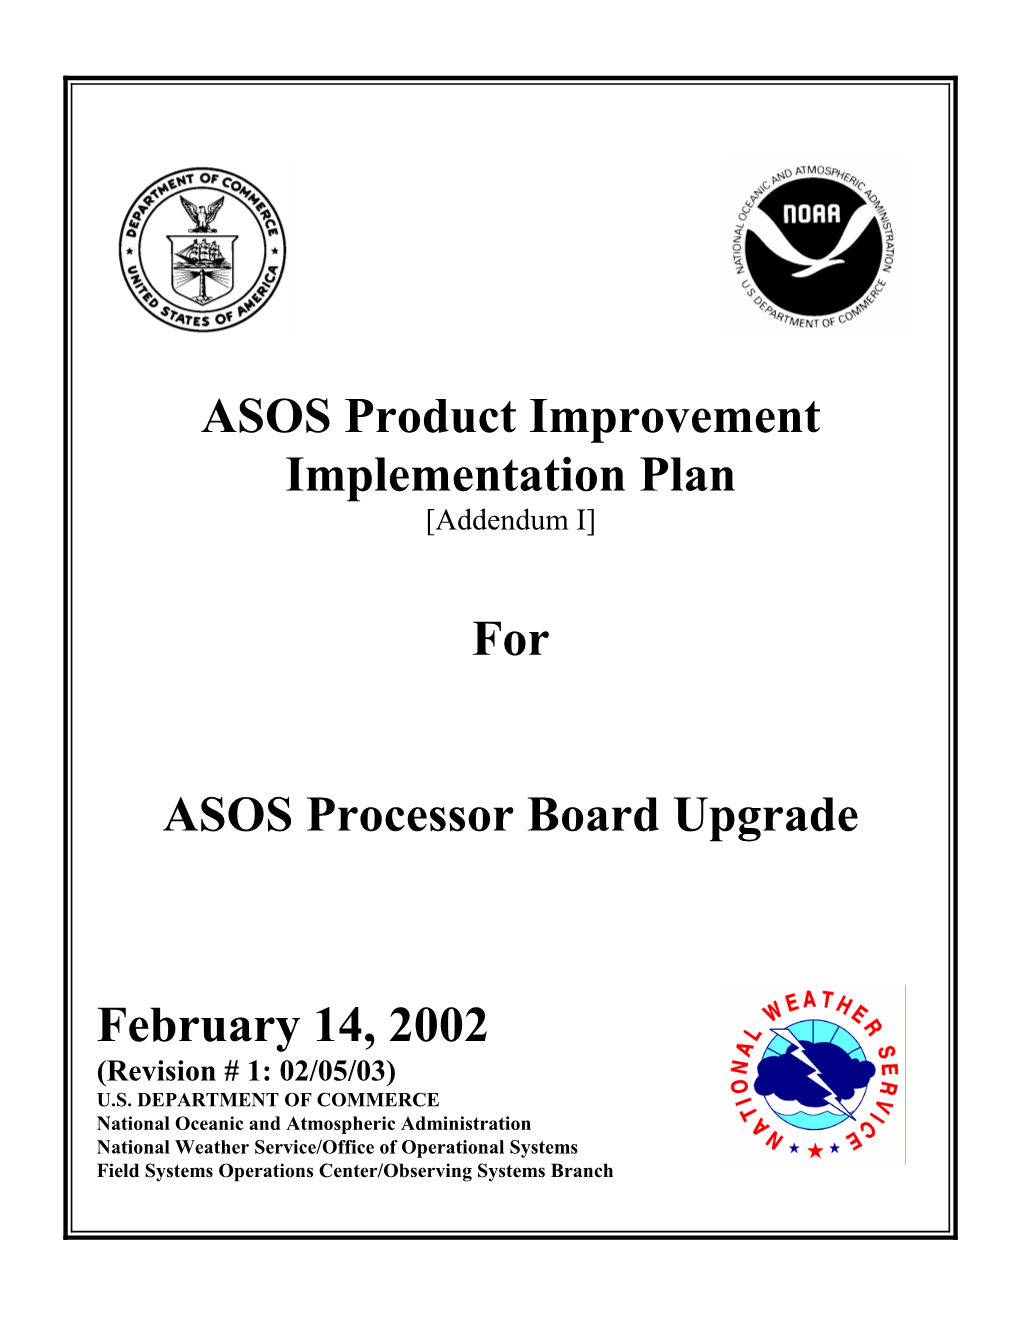 ASOS Product Improvement Implementation Plan for ASOS